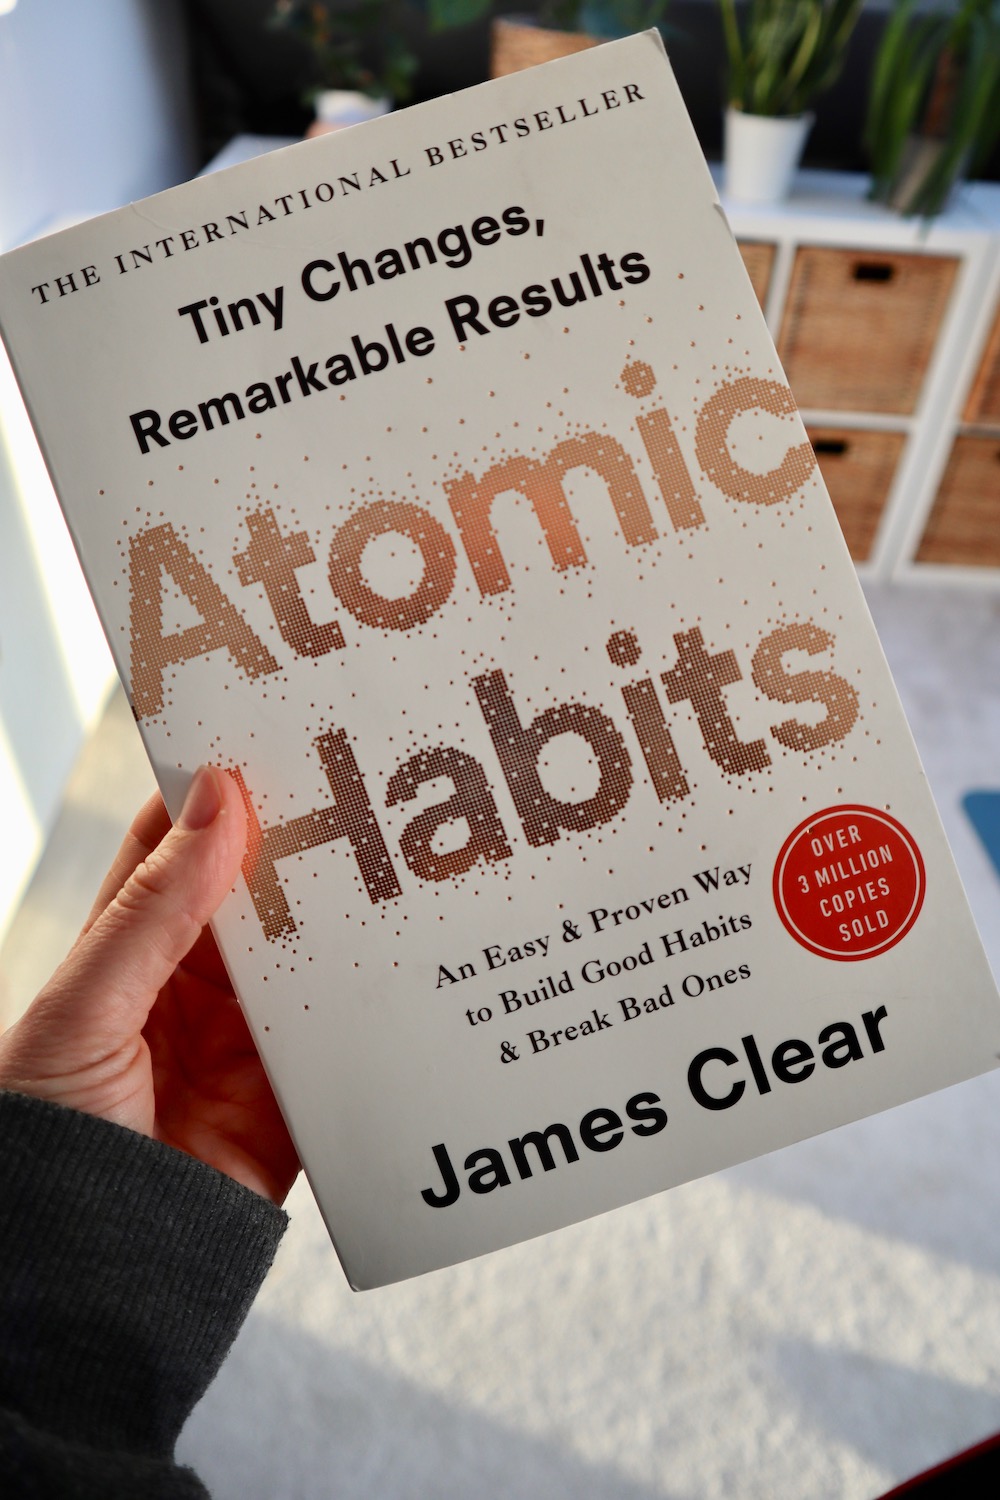 summary of atomic habits book